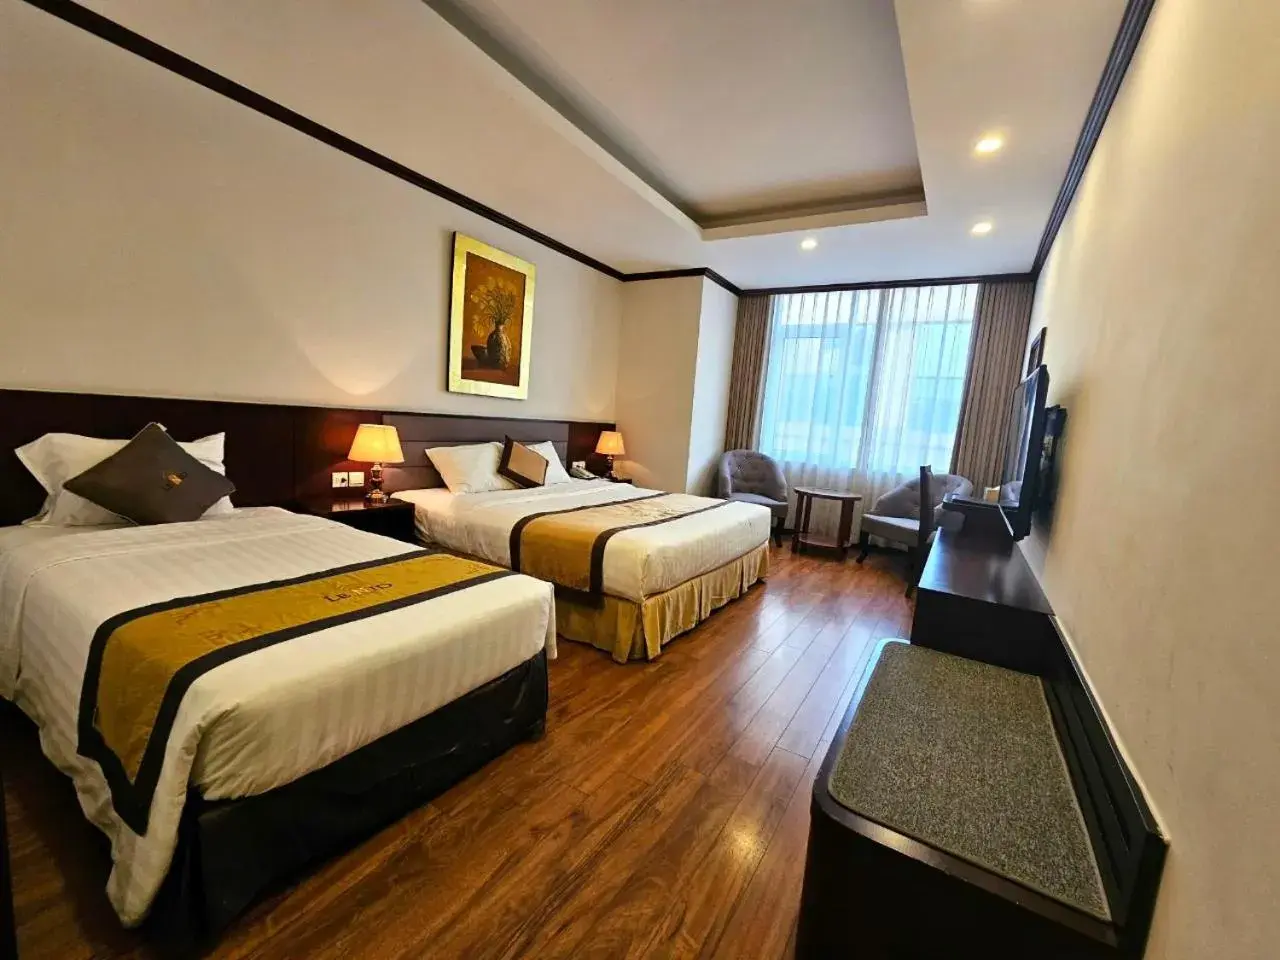 Bedroom in Lenid Hotel Tho Nhuom